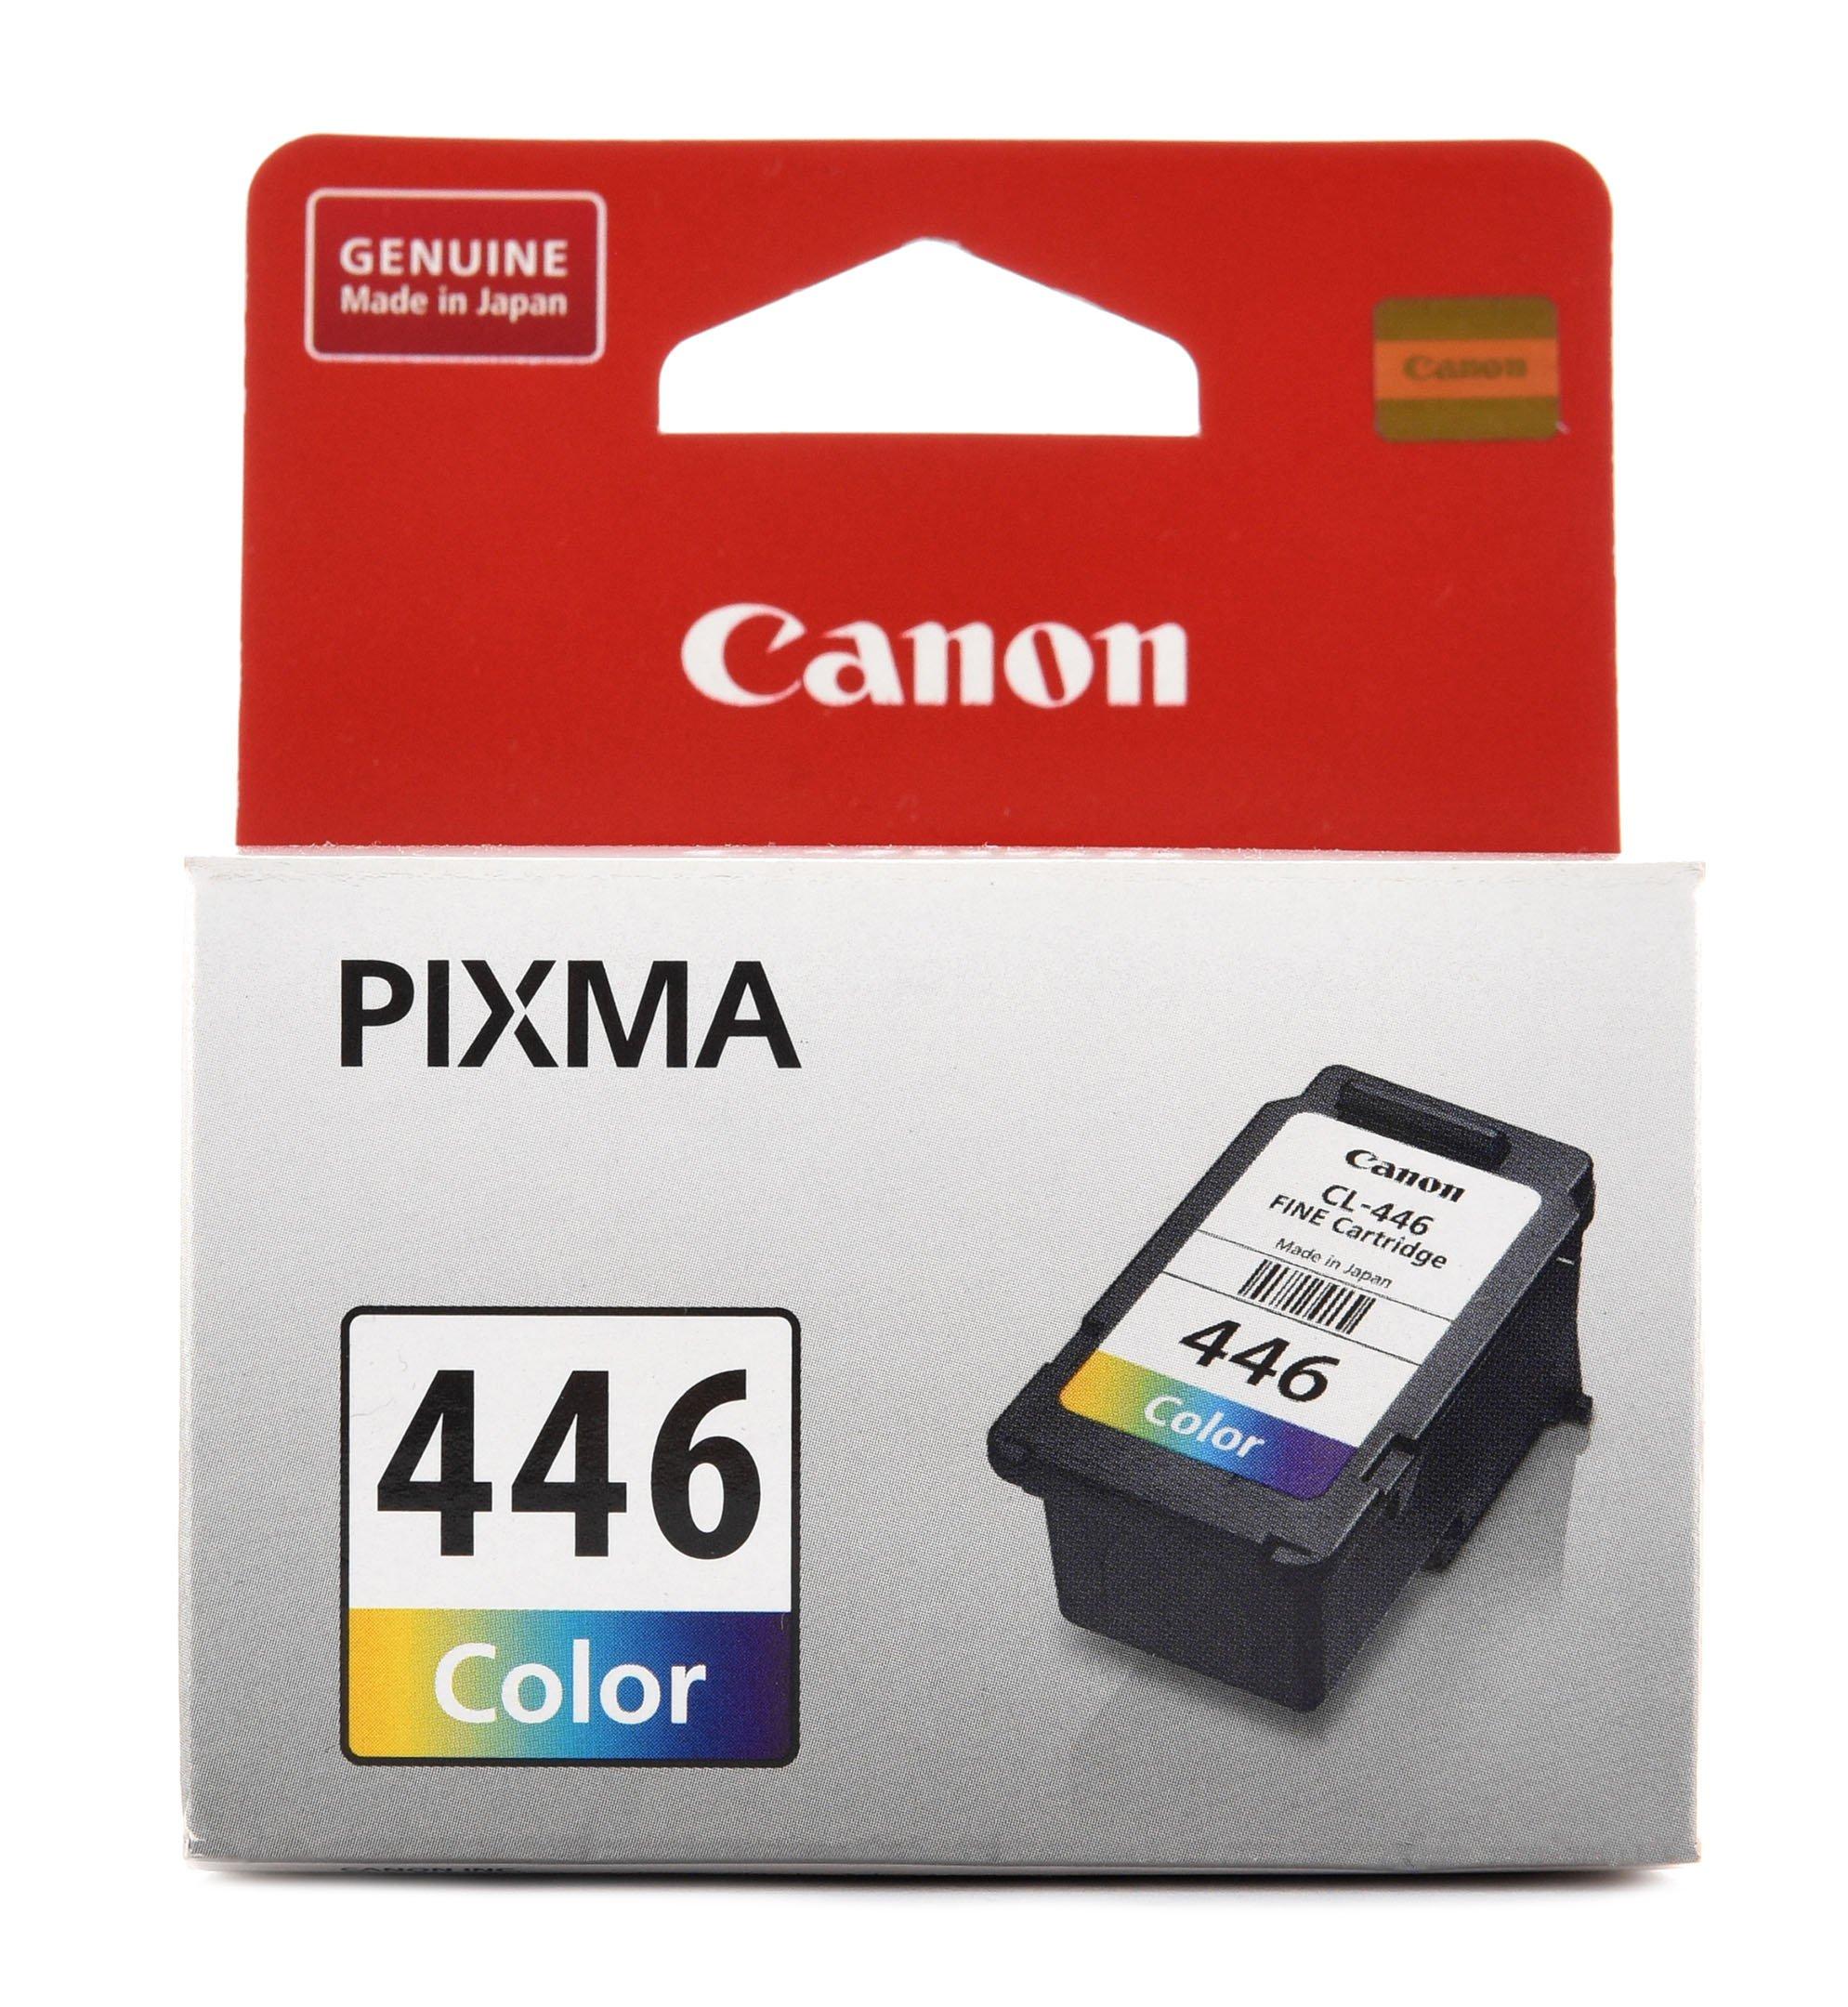 Canon pixma mg2540s заправка. Canon CL 446 Color. Картридж Canon 446. Картридж Canon PIXMA mx2440/2540 (o) PG-445, BK. Картридж Canon PG-445 8283b001.